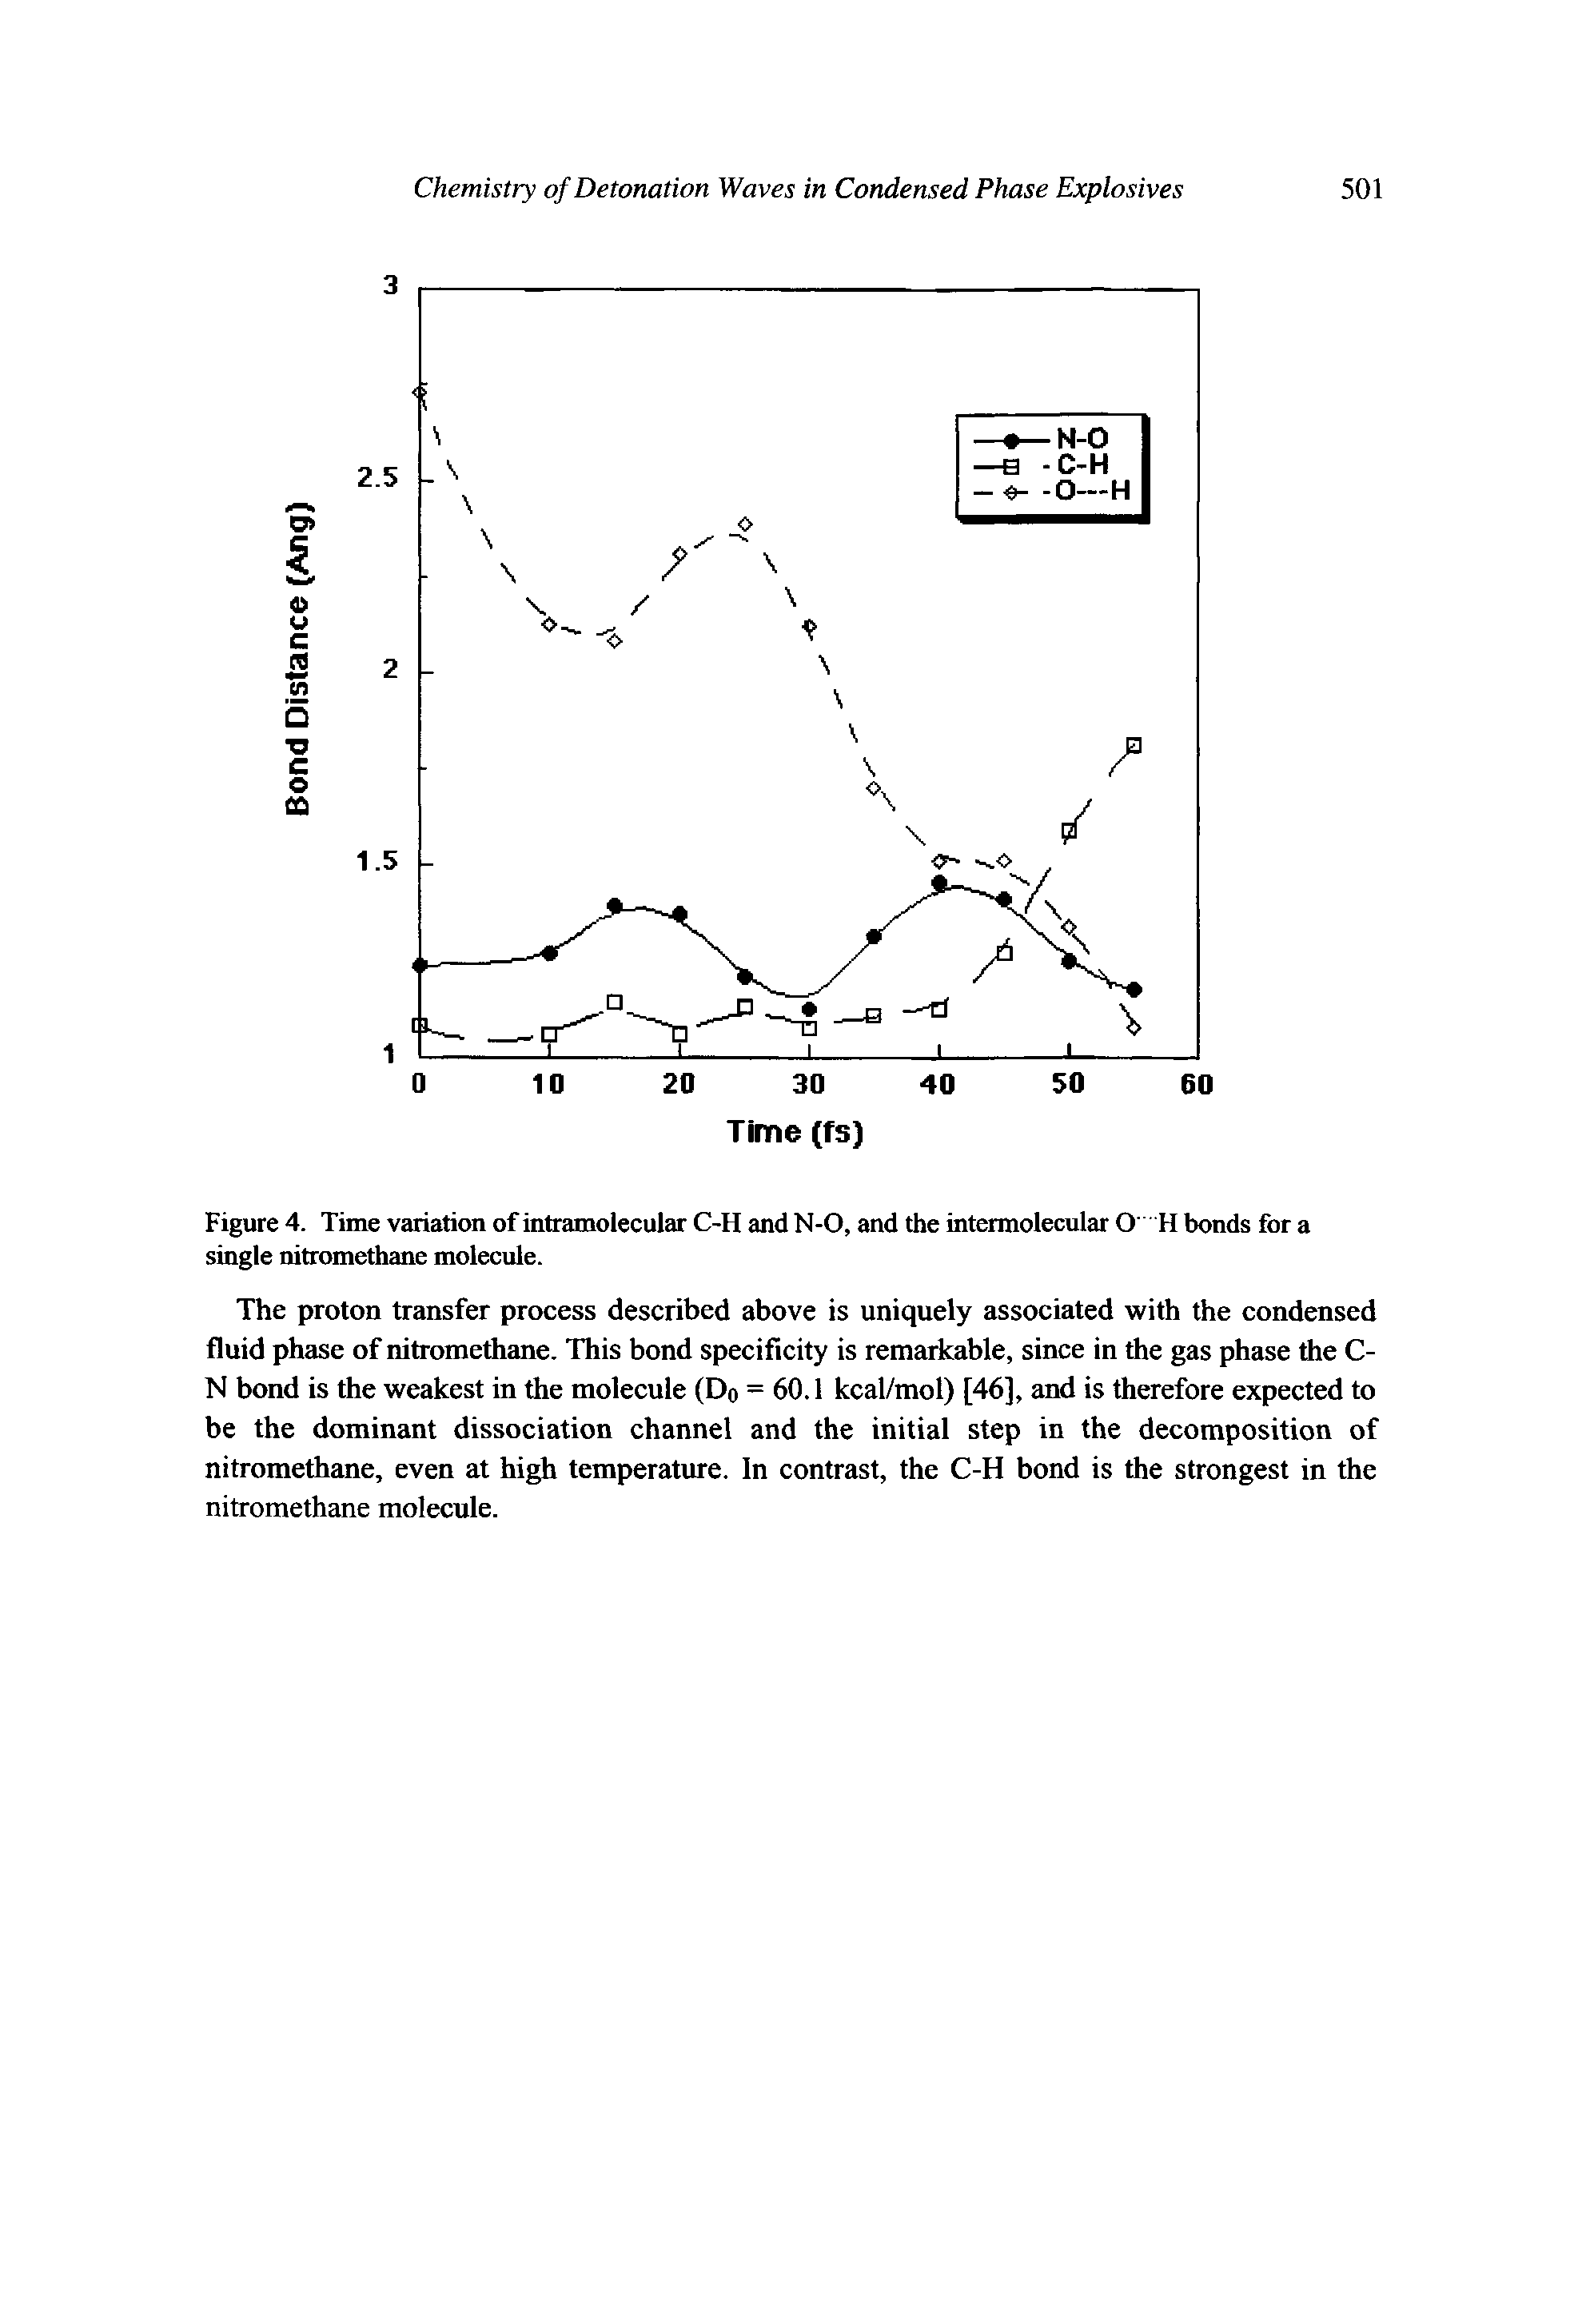 Figure 4. Time variation of intramolecular C-H andN-O, and the intermolecular O H bonds fora single nitromethane molecule.